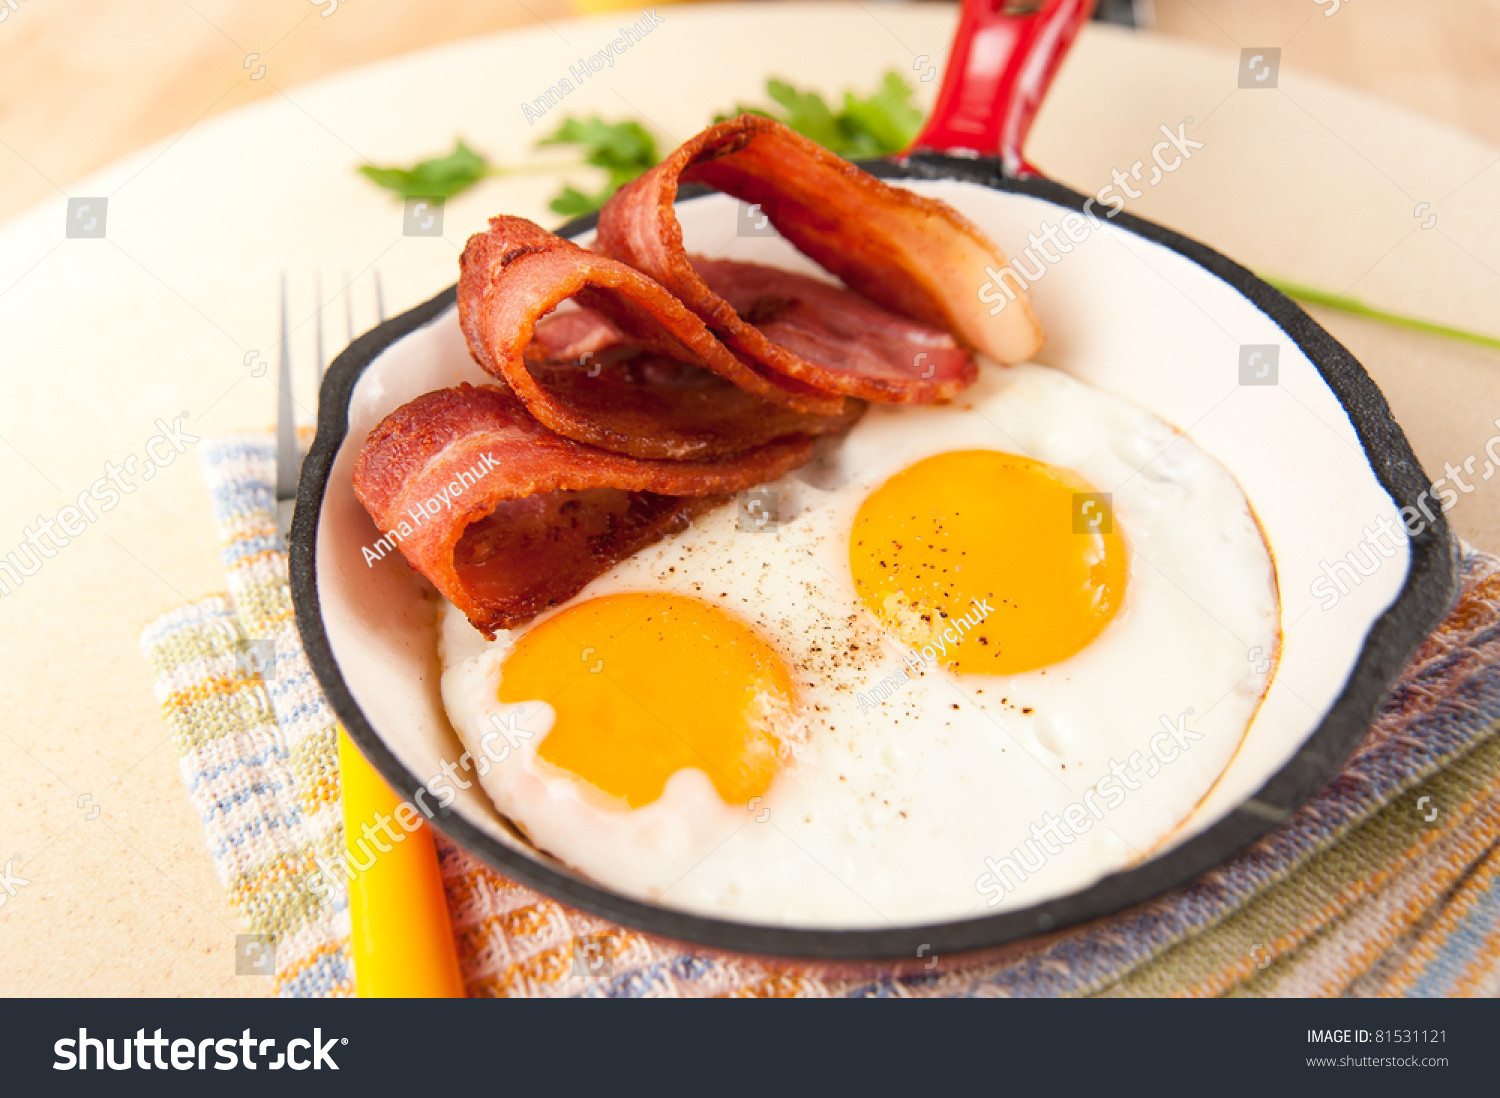 Healthy Bacon Breakfast
 Turkey Bacon And Fried Eggs For Healthy Paleo Breakfast